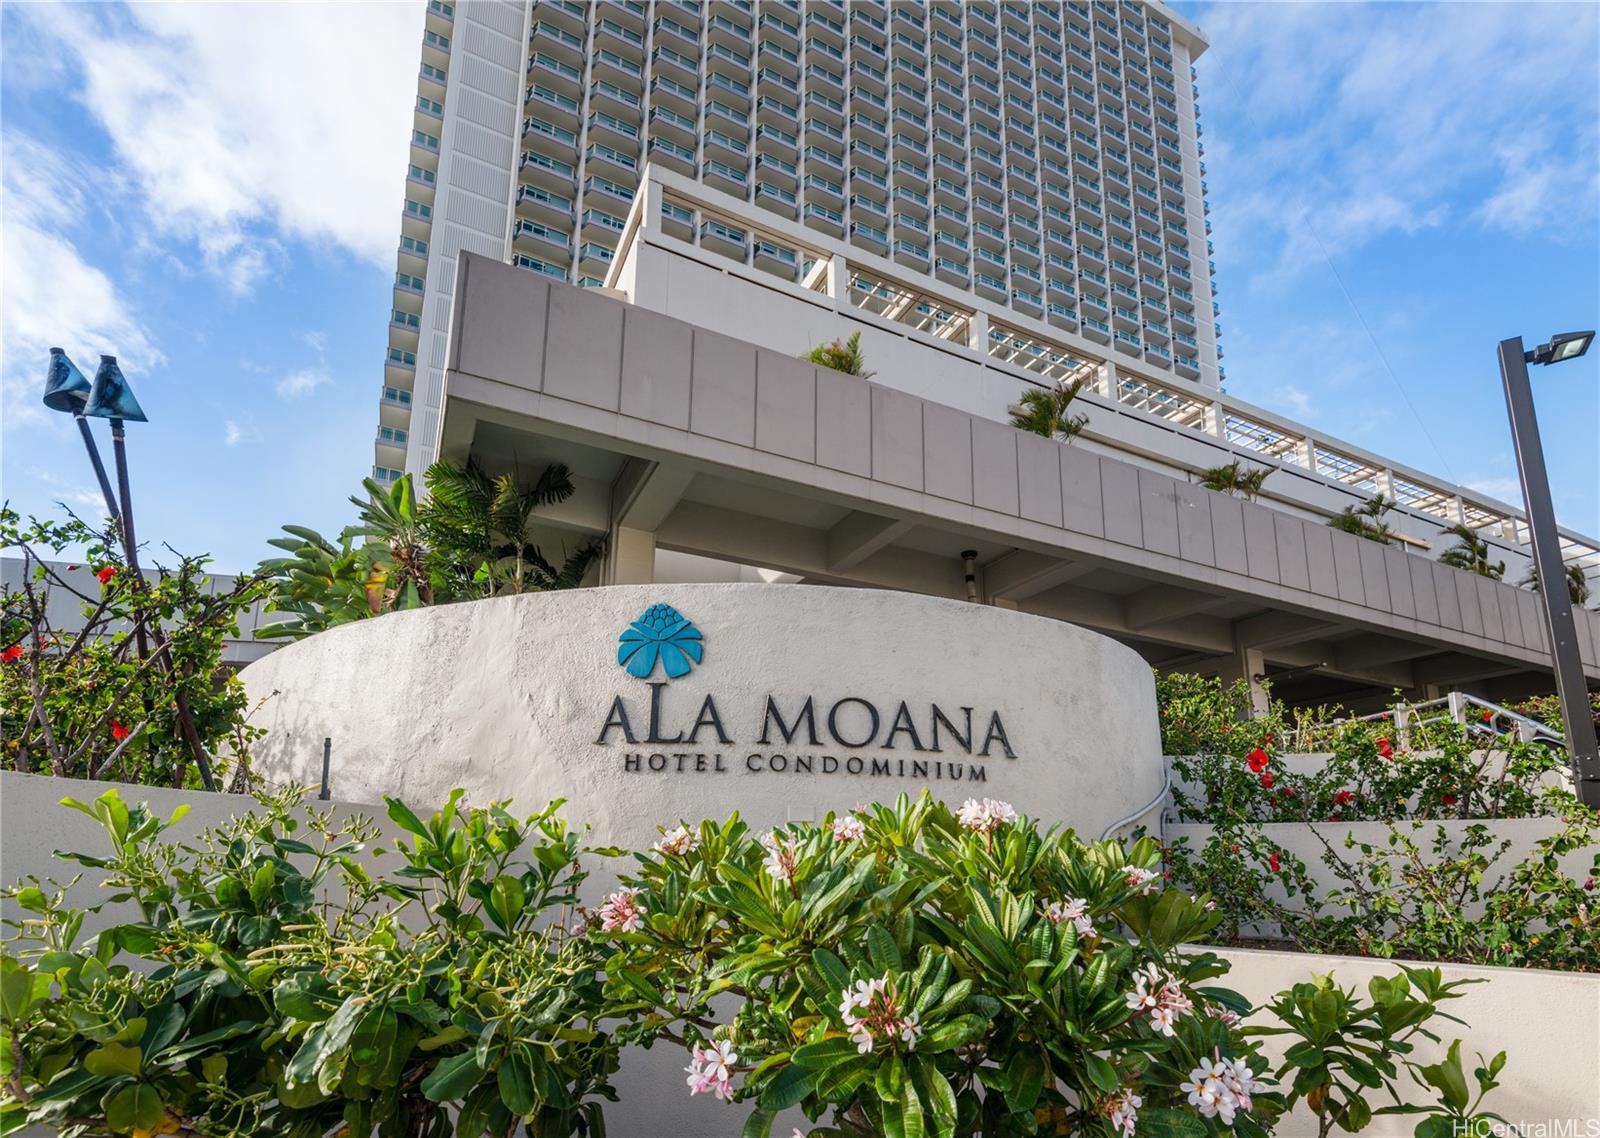 Ala Moana Hotel Condo 410 Atkinson Drive  Unit 2532